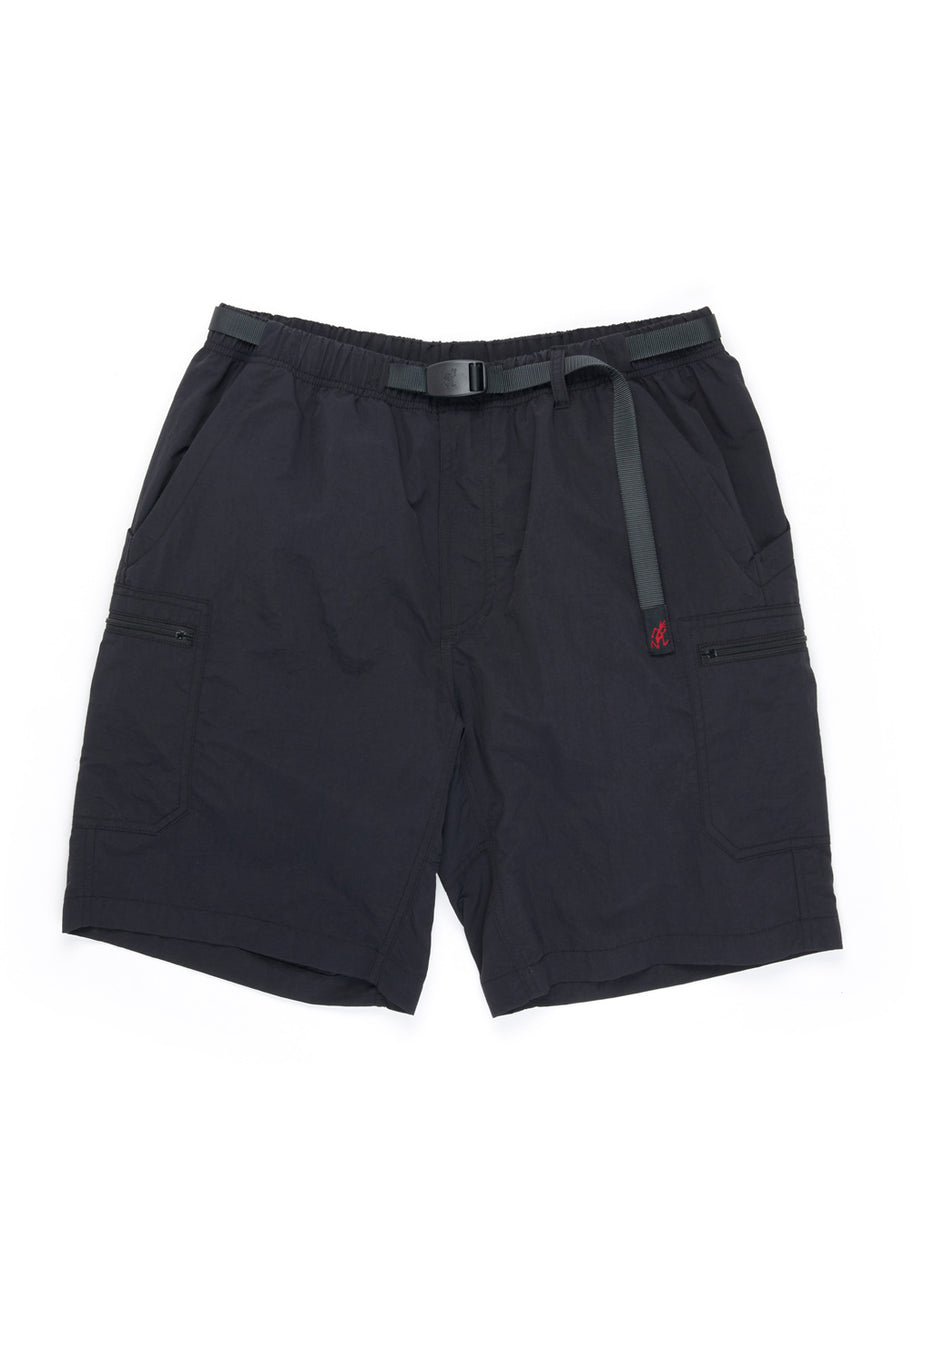 Gramicci Men's Nylon Utility Shorts - Black